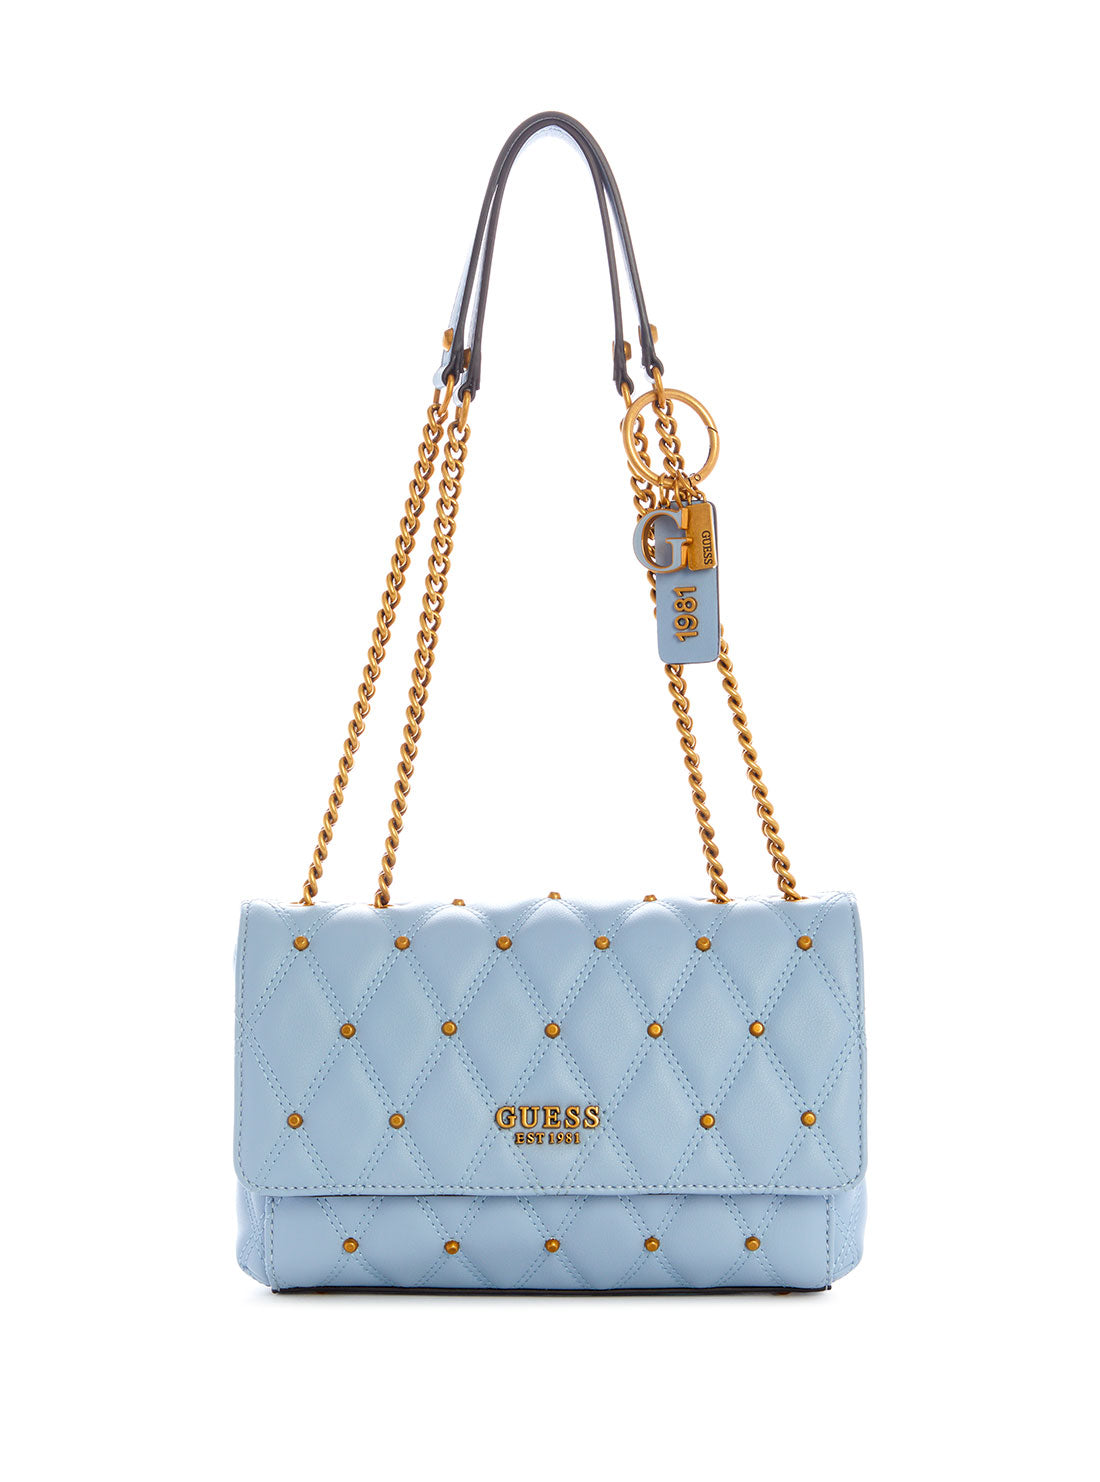 GUESS Womens Blue Triana Convertible Crossbody Bag QS855321 Front View